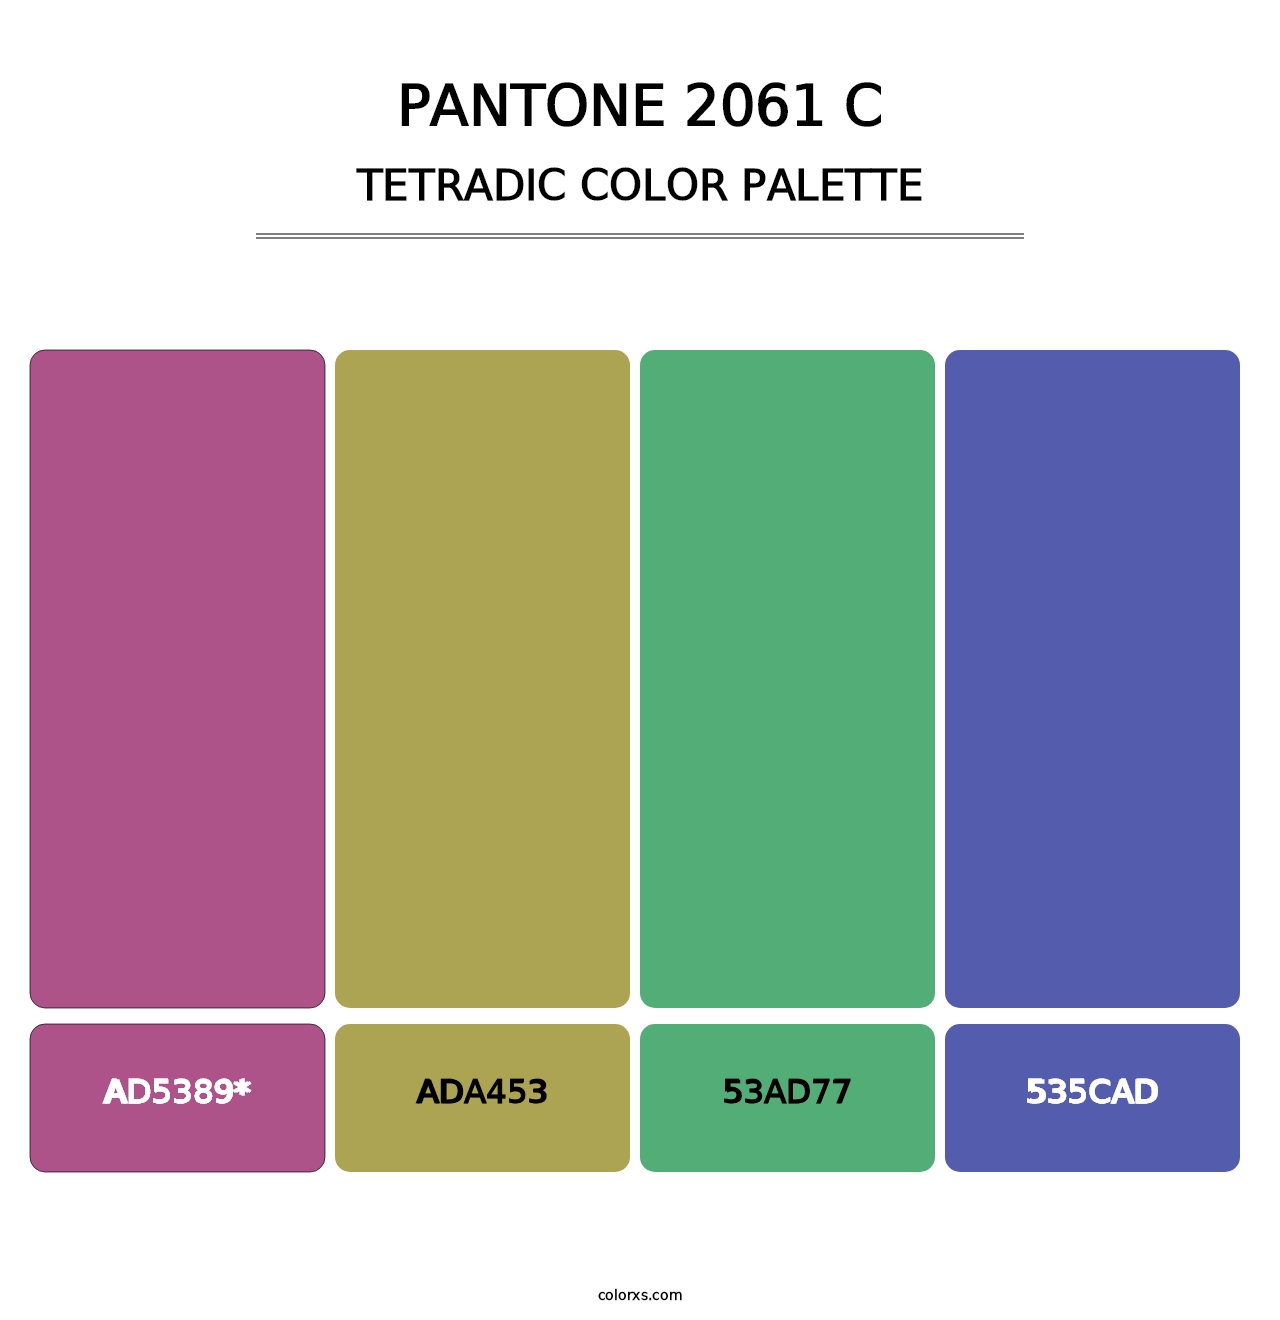 PANTONE 2061 C - Tetradic Color Palette